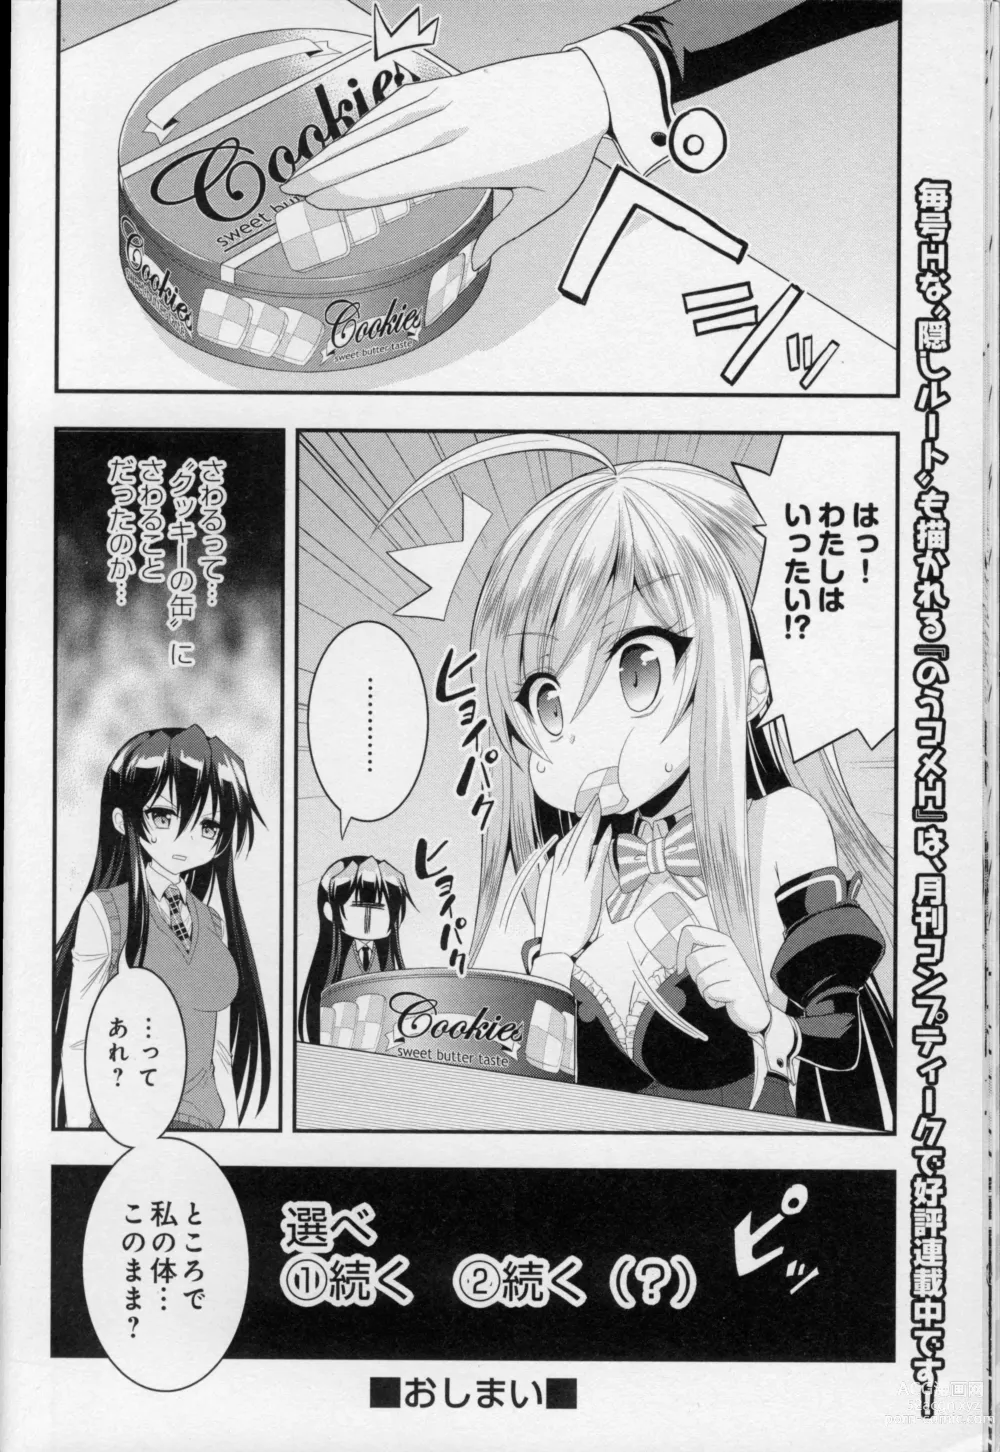 Page 15 of manga 「どっちを選ぶ?」ダブル描き下ろしコミックス Blu-ray＆DVD 第2巻 同梱特典